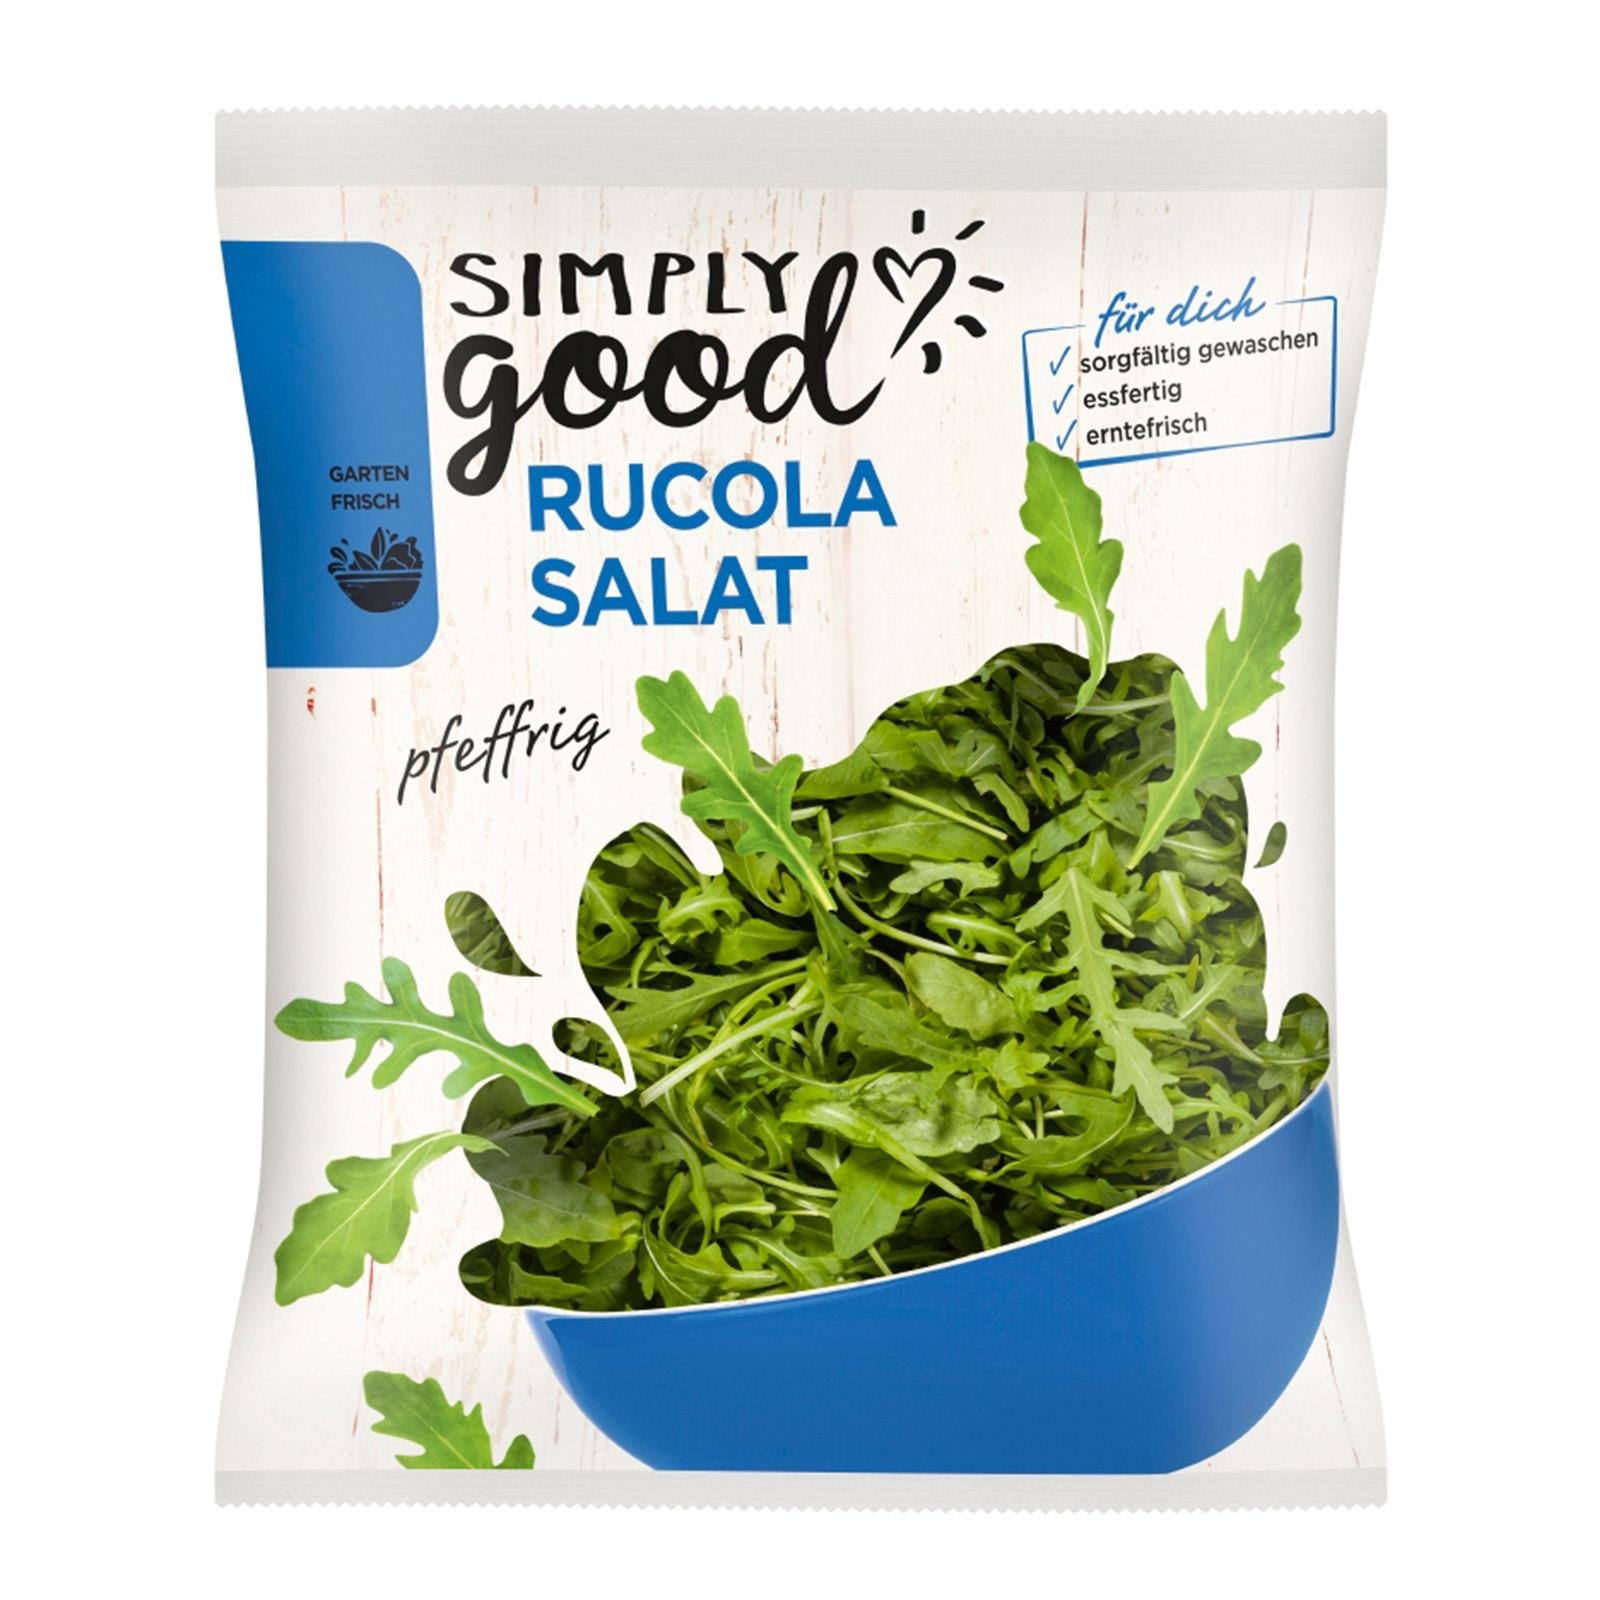 Simply Good Rucola Salat | BILLA Online Shop